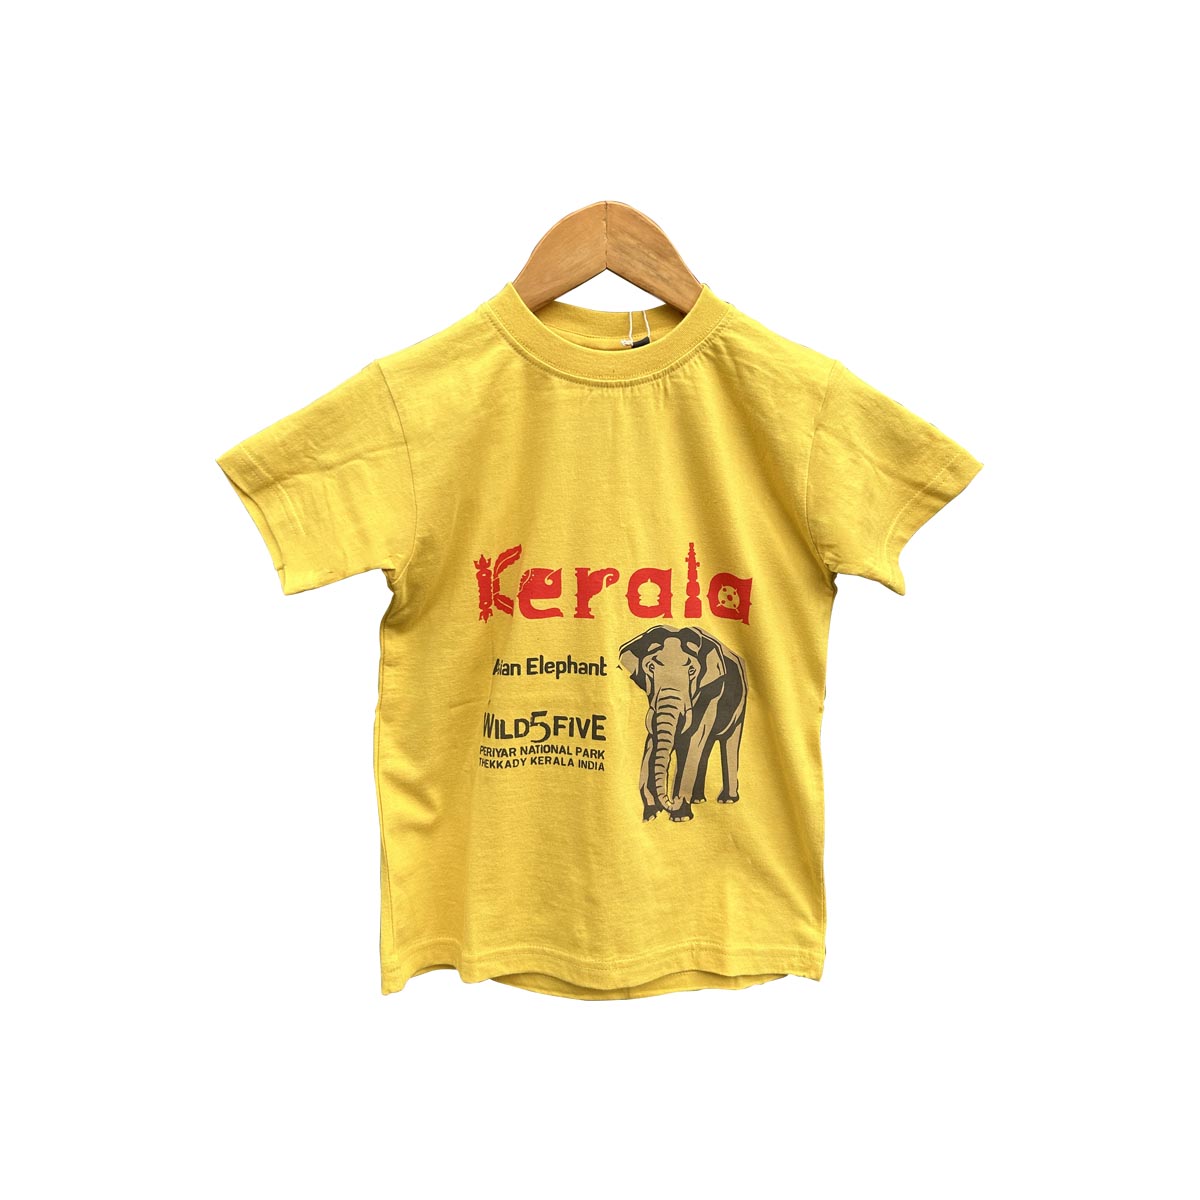 Kerala Wild5 Elephant — Kids T-shirt (Yellow & Brown)